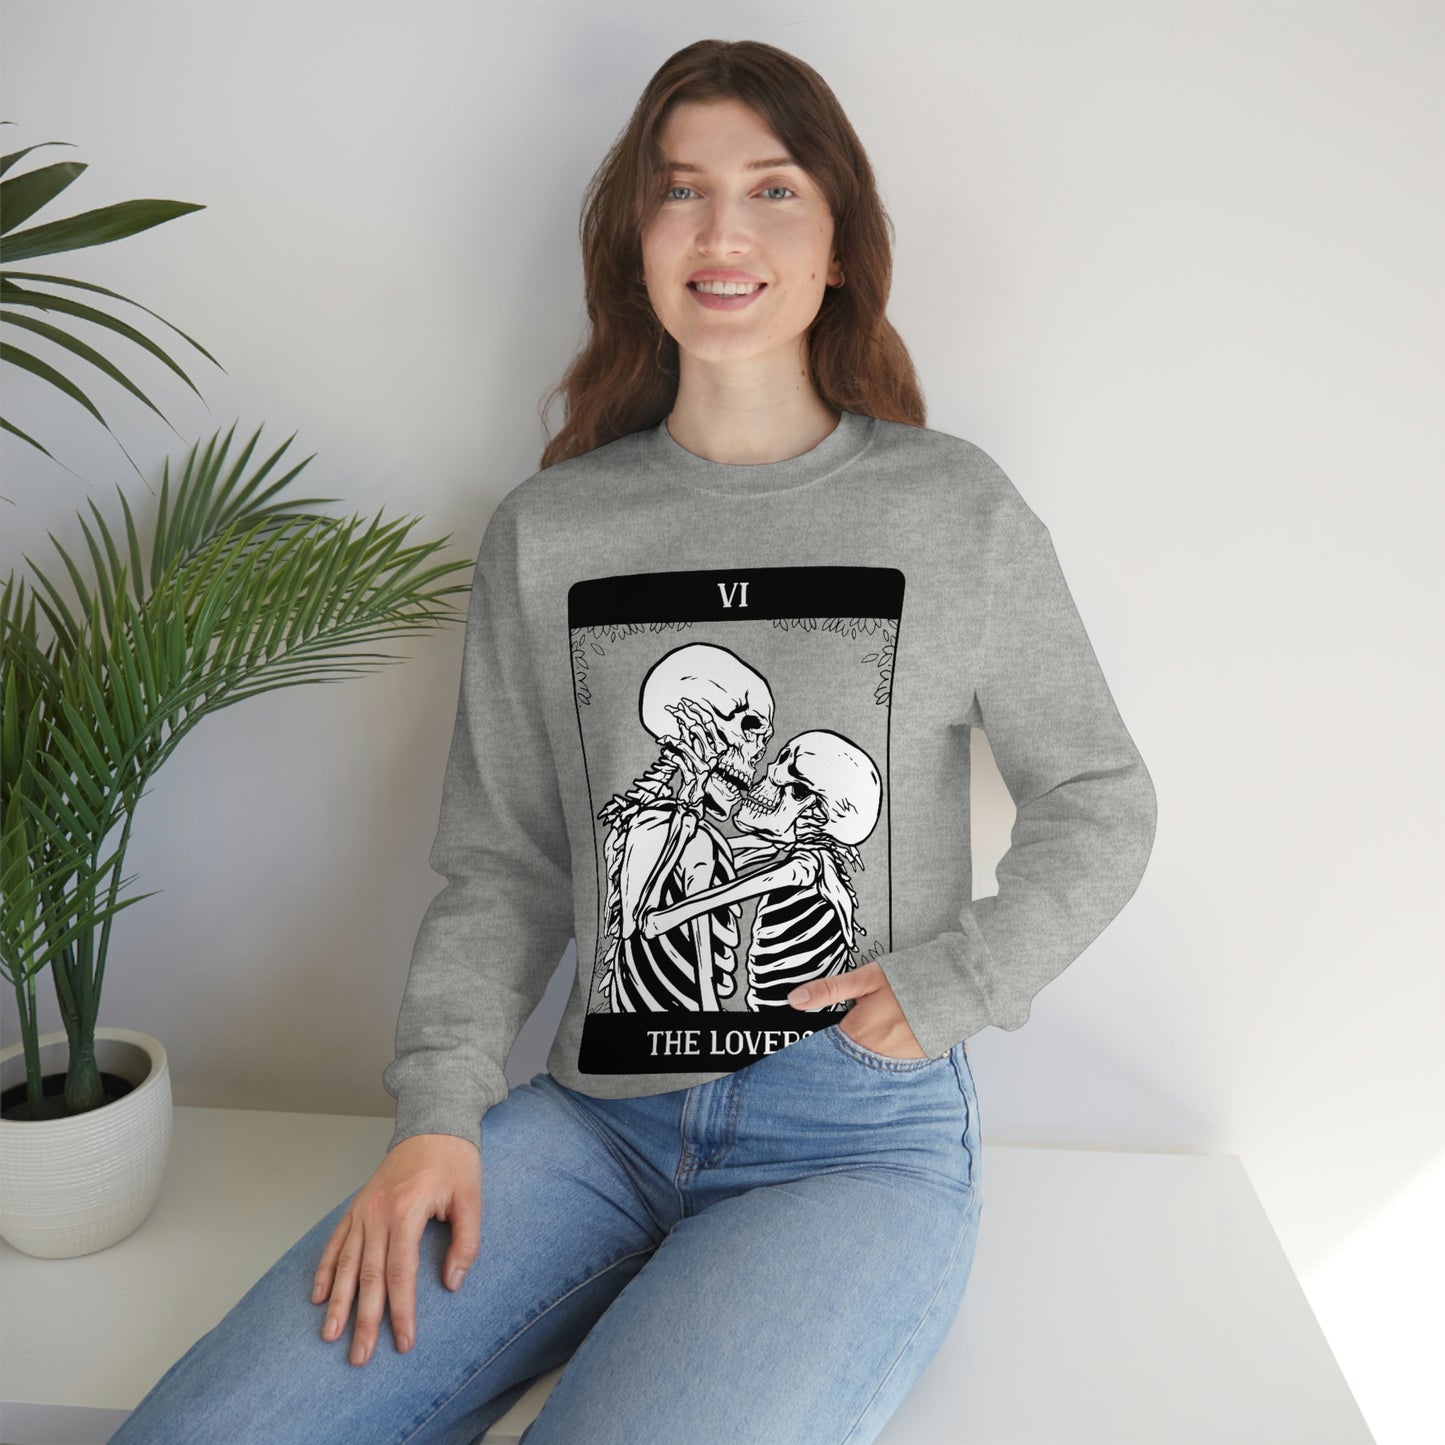 The Lovers Tarrot Card Goth Aesthetic Sweatshirt